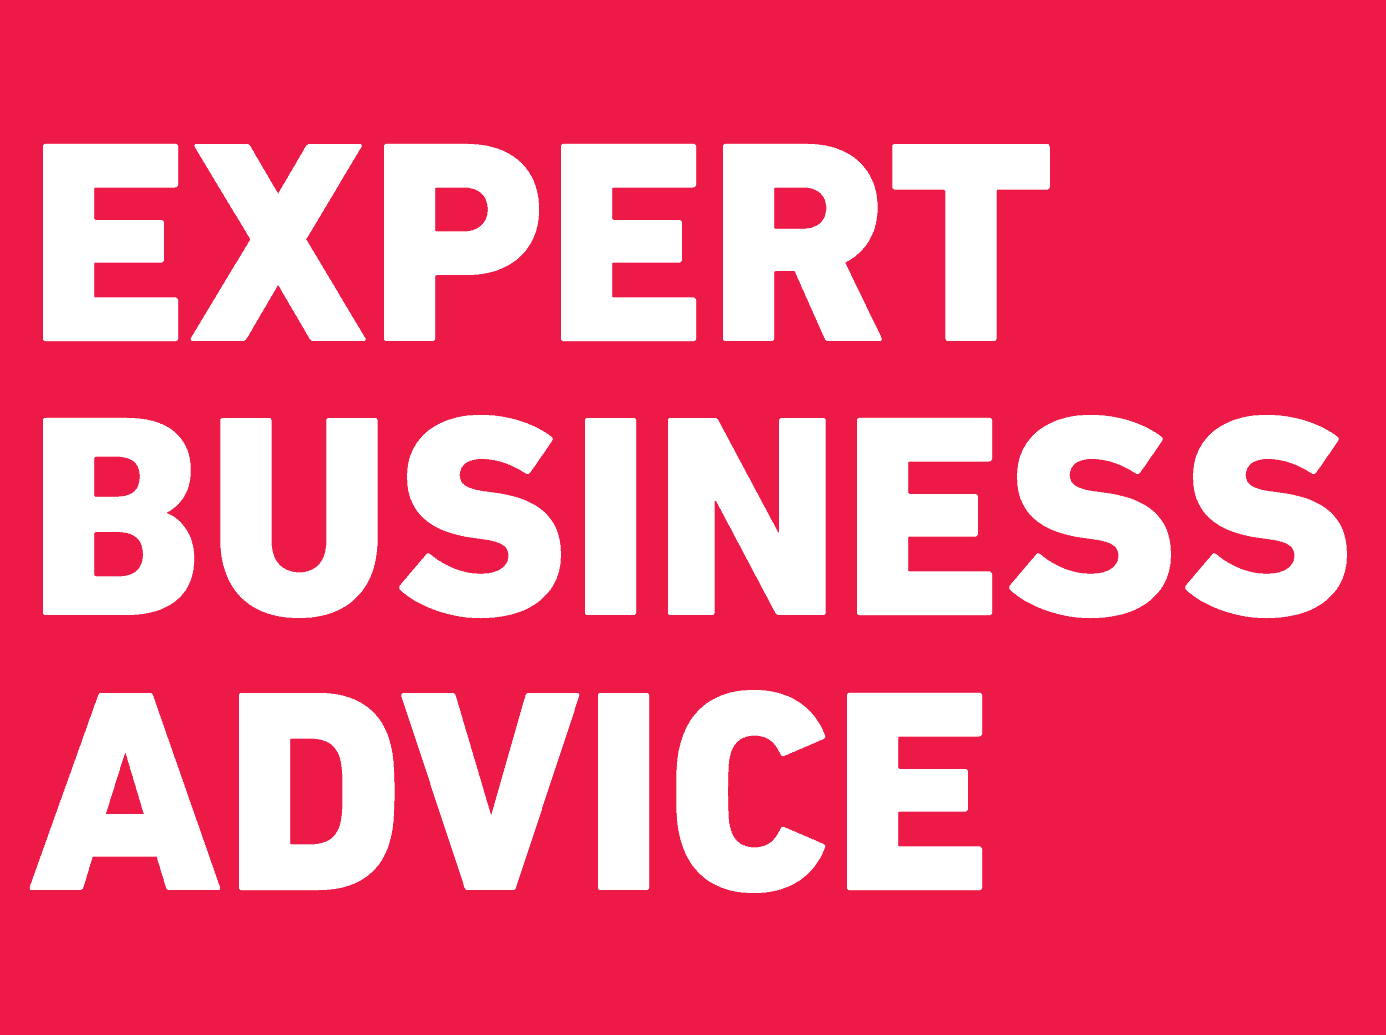 EXPERT-BUSINESS-ADVICE.png